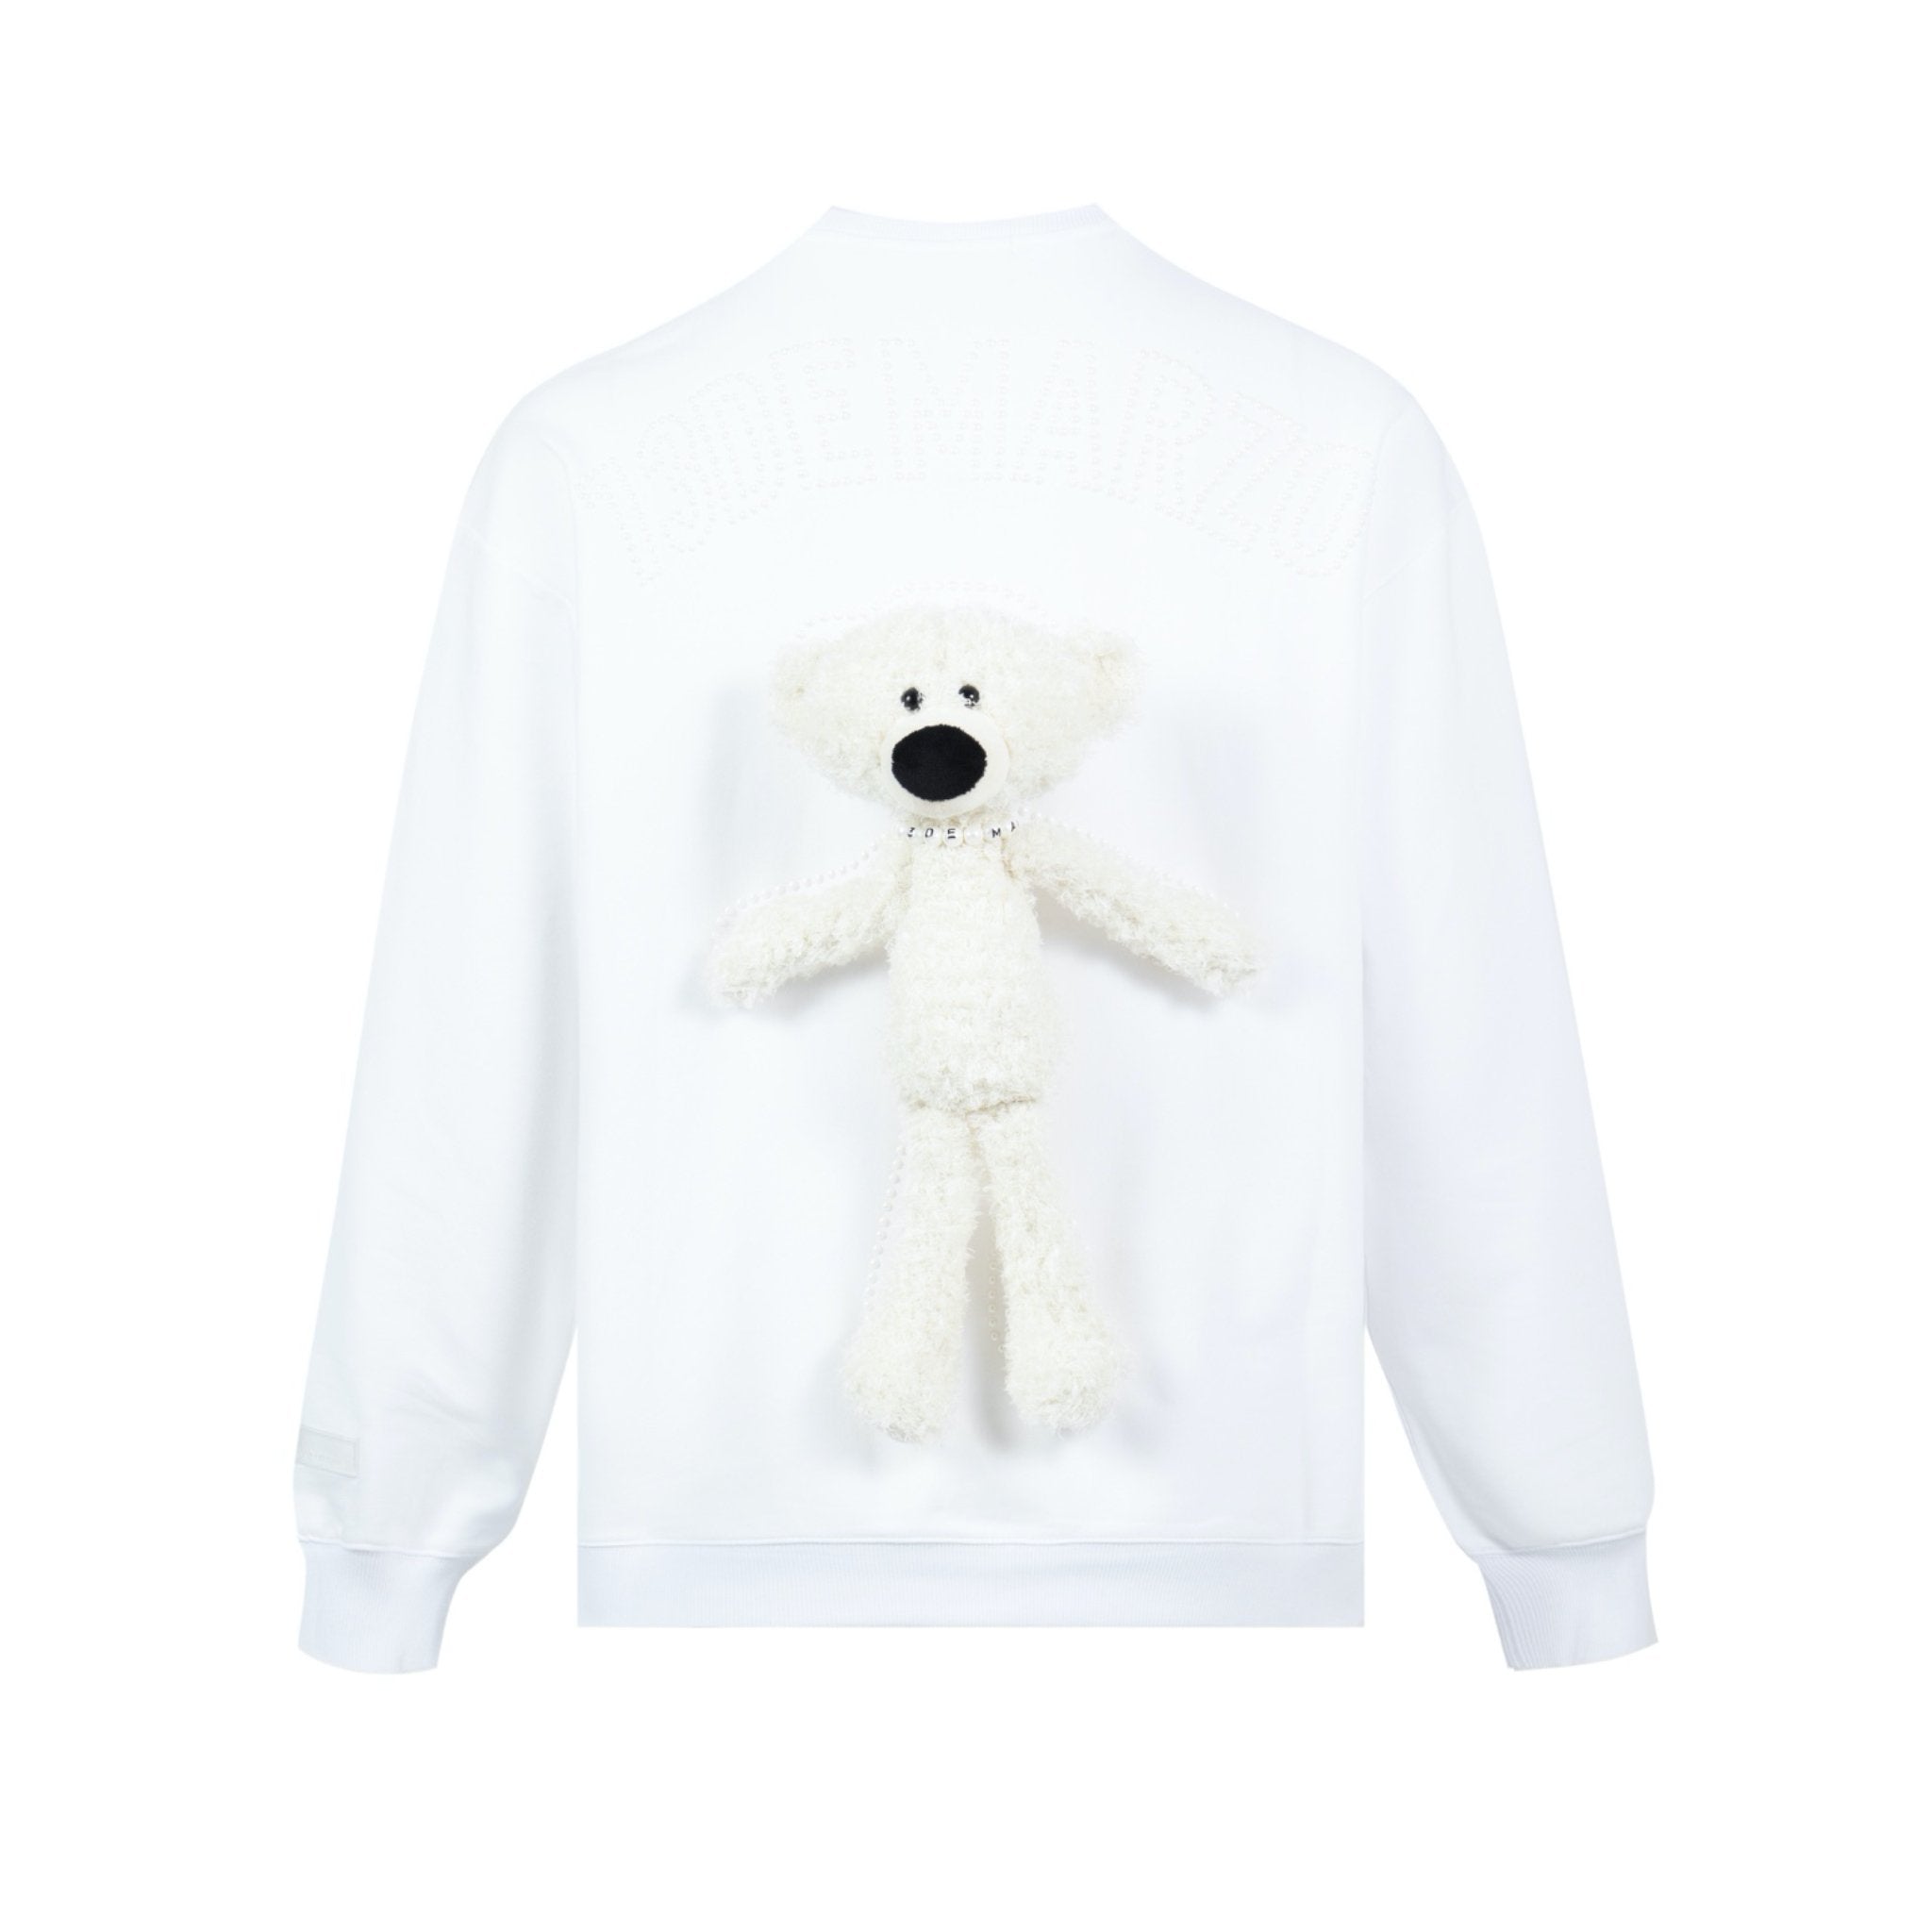 13DE MARZO Pearl Palda Bear Sweater White